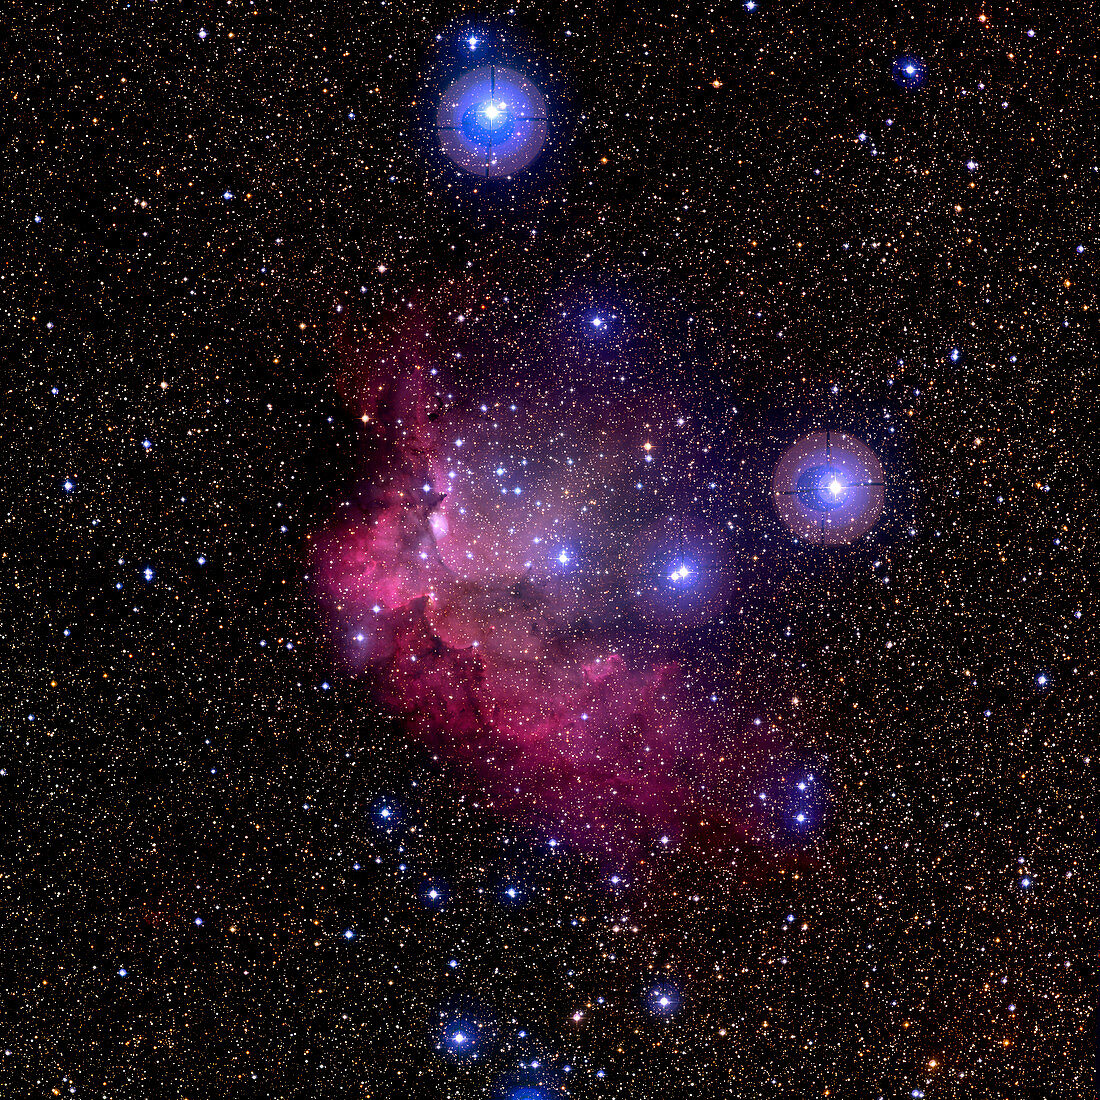 Emission nebula Sh2-142 and star cluster